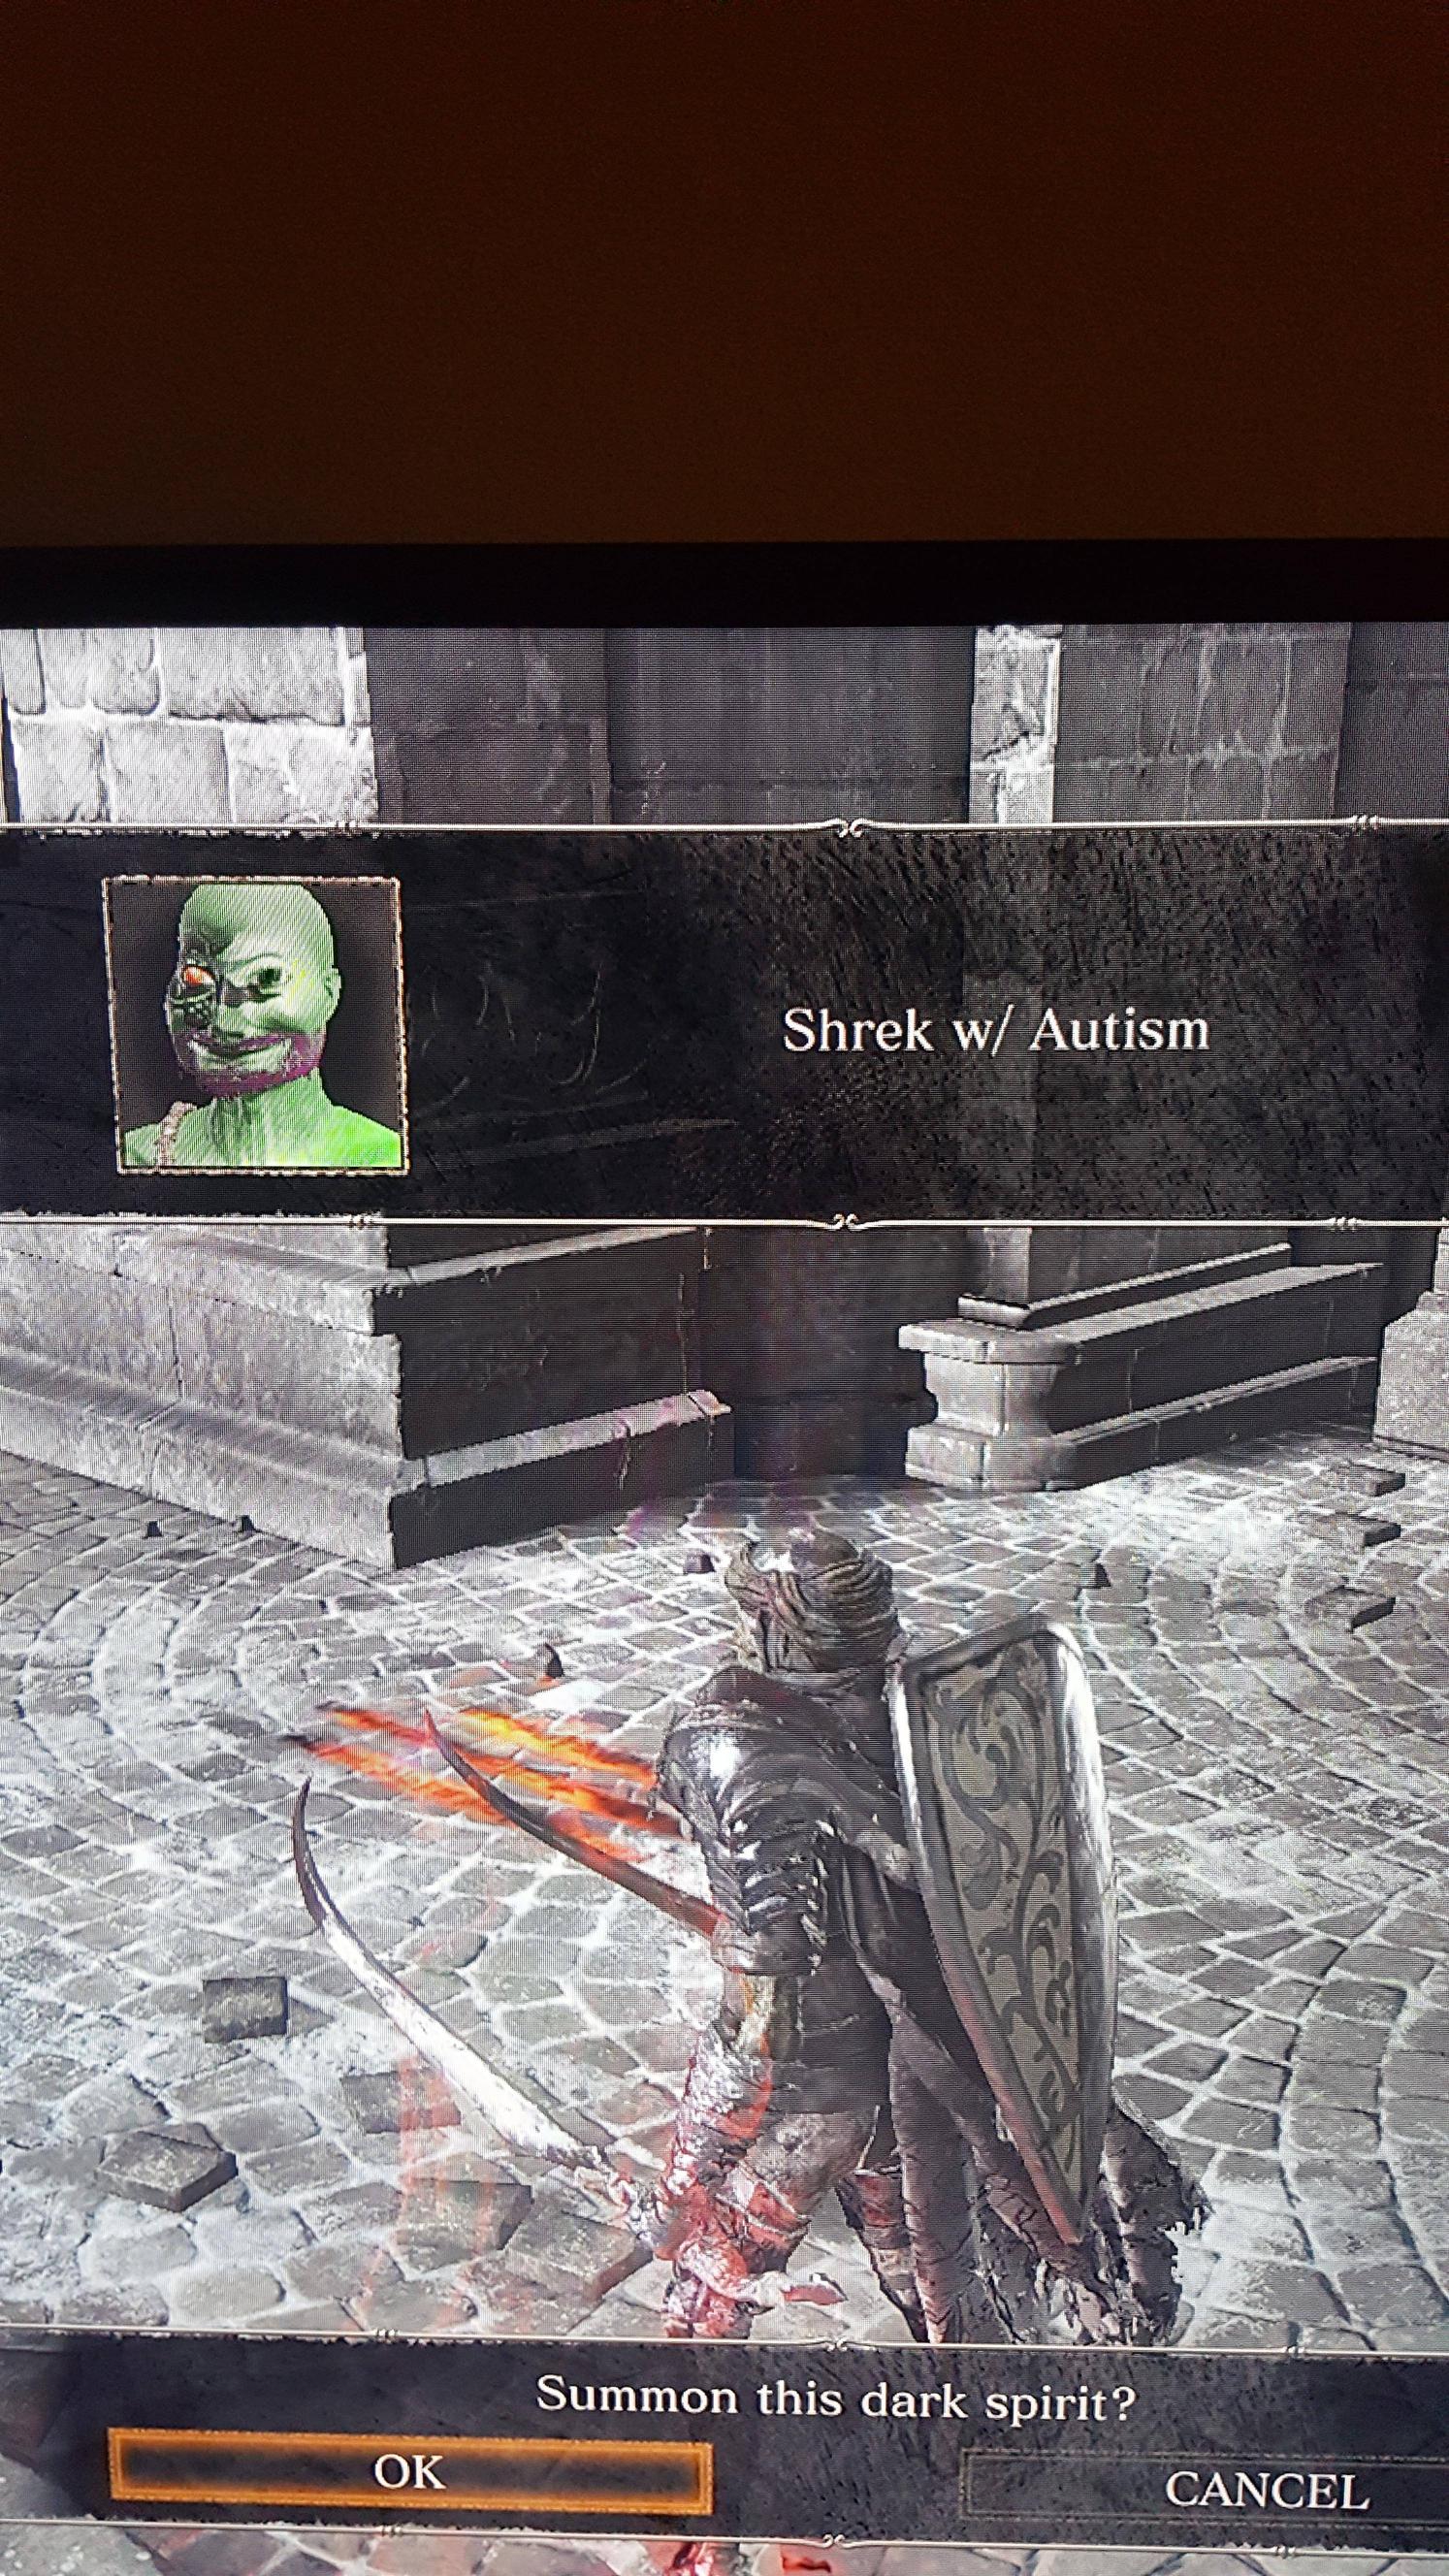 dark souls shrek with autism - Shrek w Autism Summon this dark spirit? Cancel